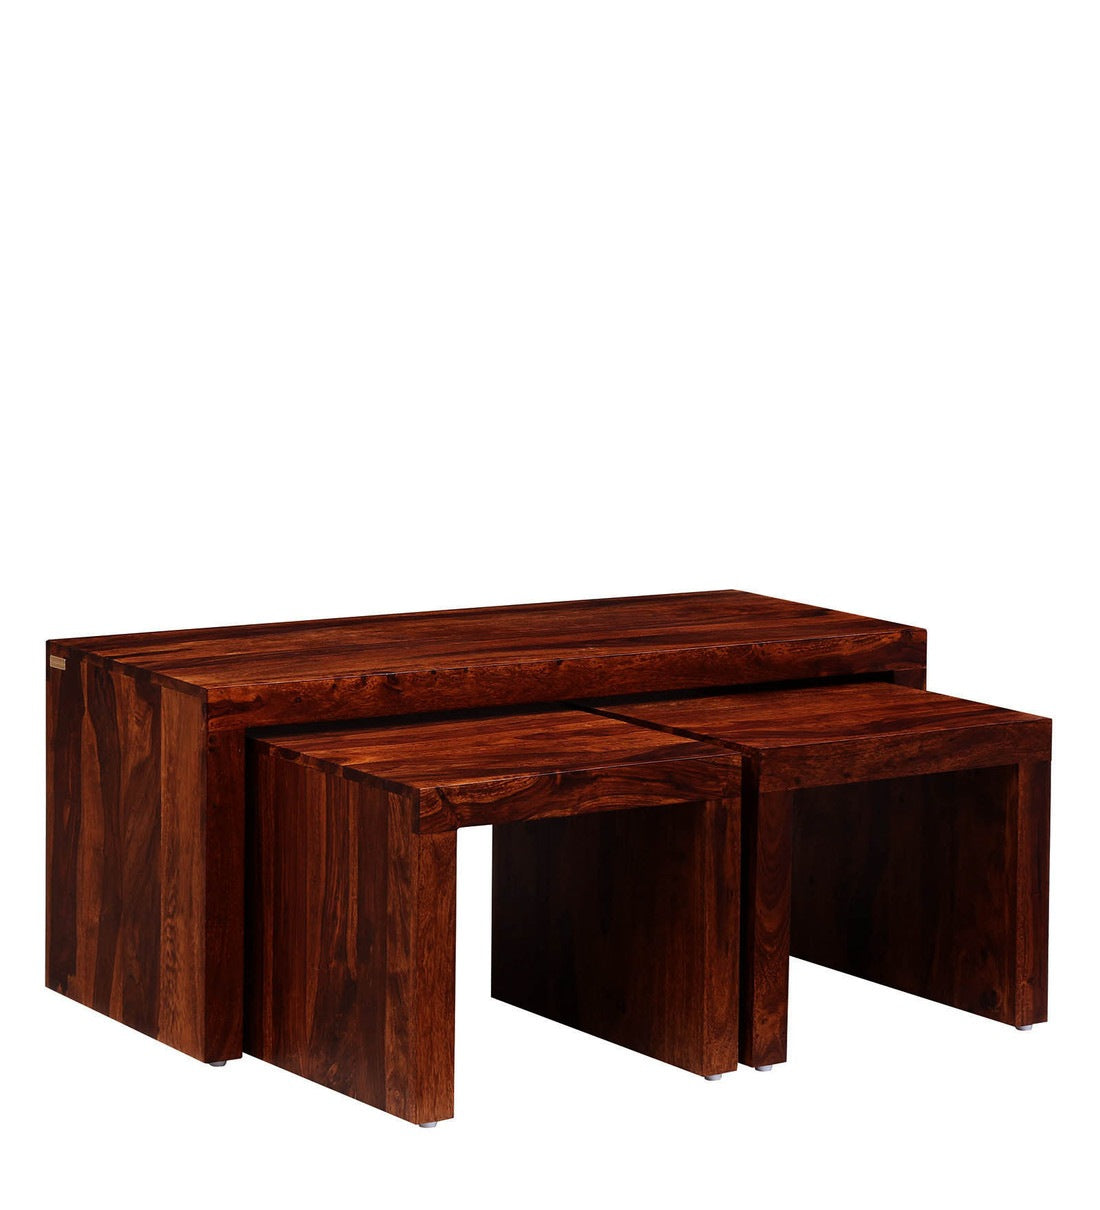 Acro Coffee Table Set With 2 Stools For Living Room - Rajwada Furnish